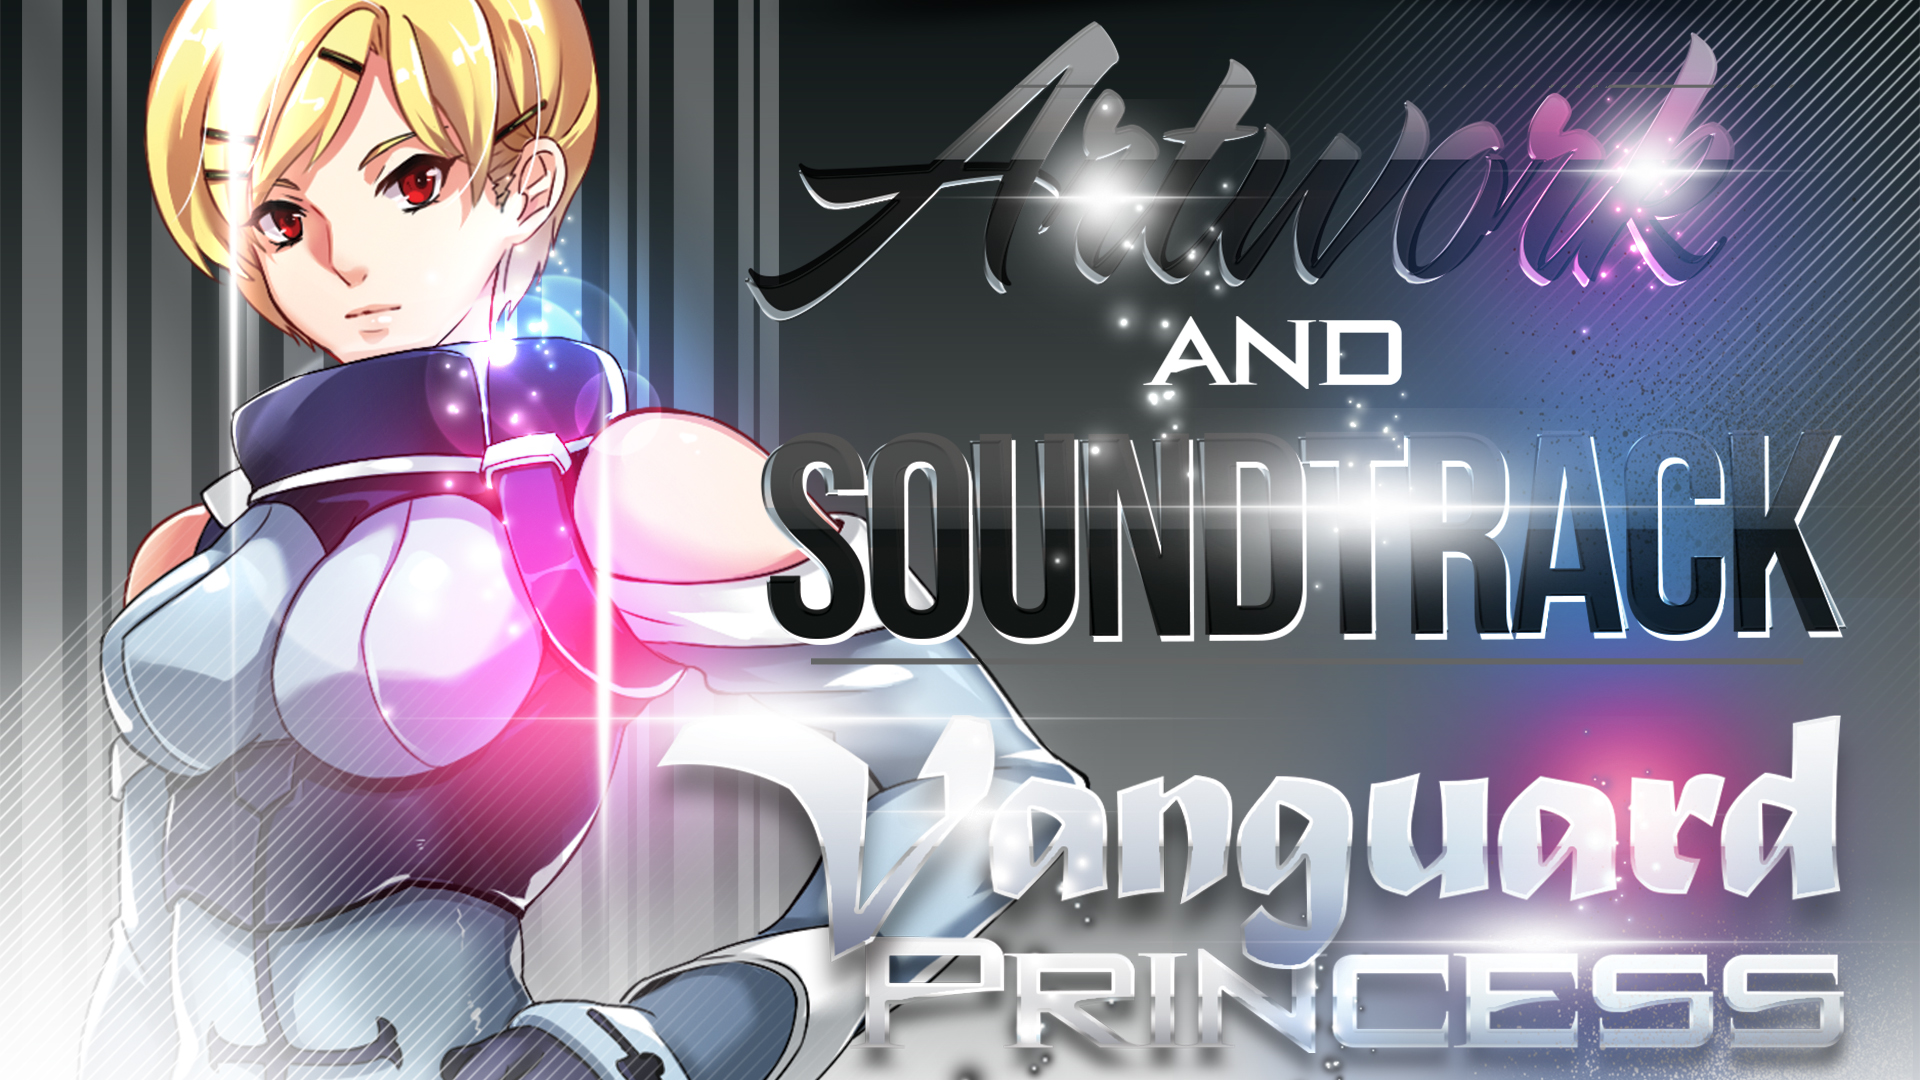 Vanguard Princess - Artwork and Soundtrack DLC Steam CD Key 1.41 $